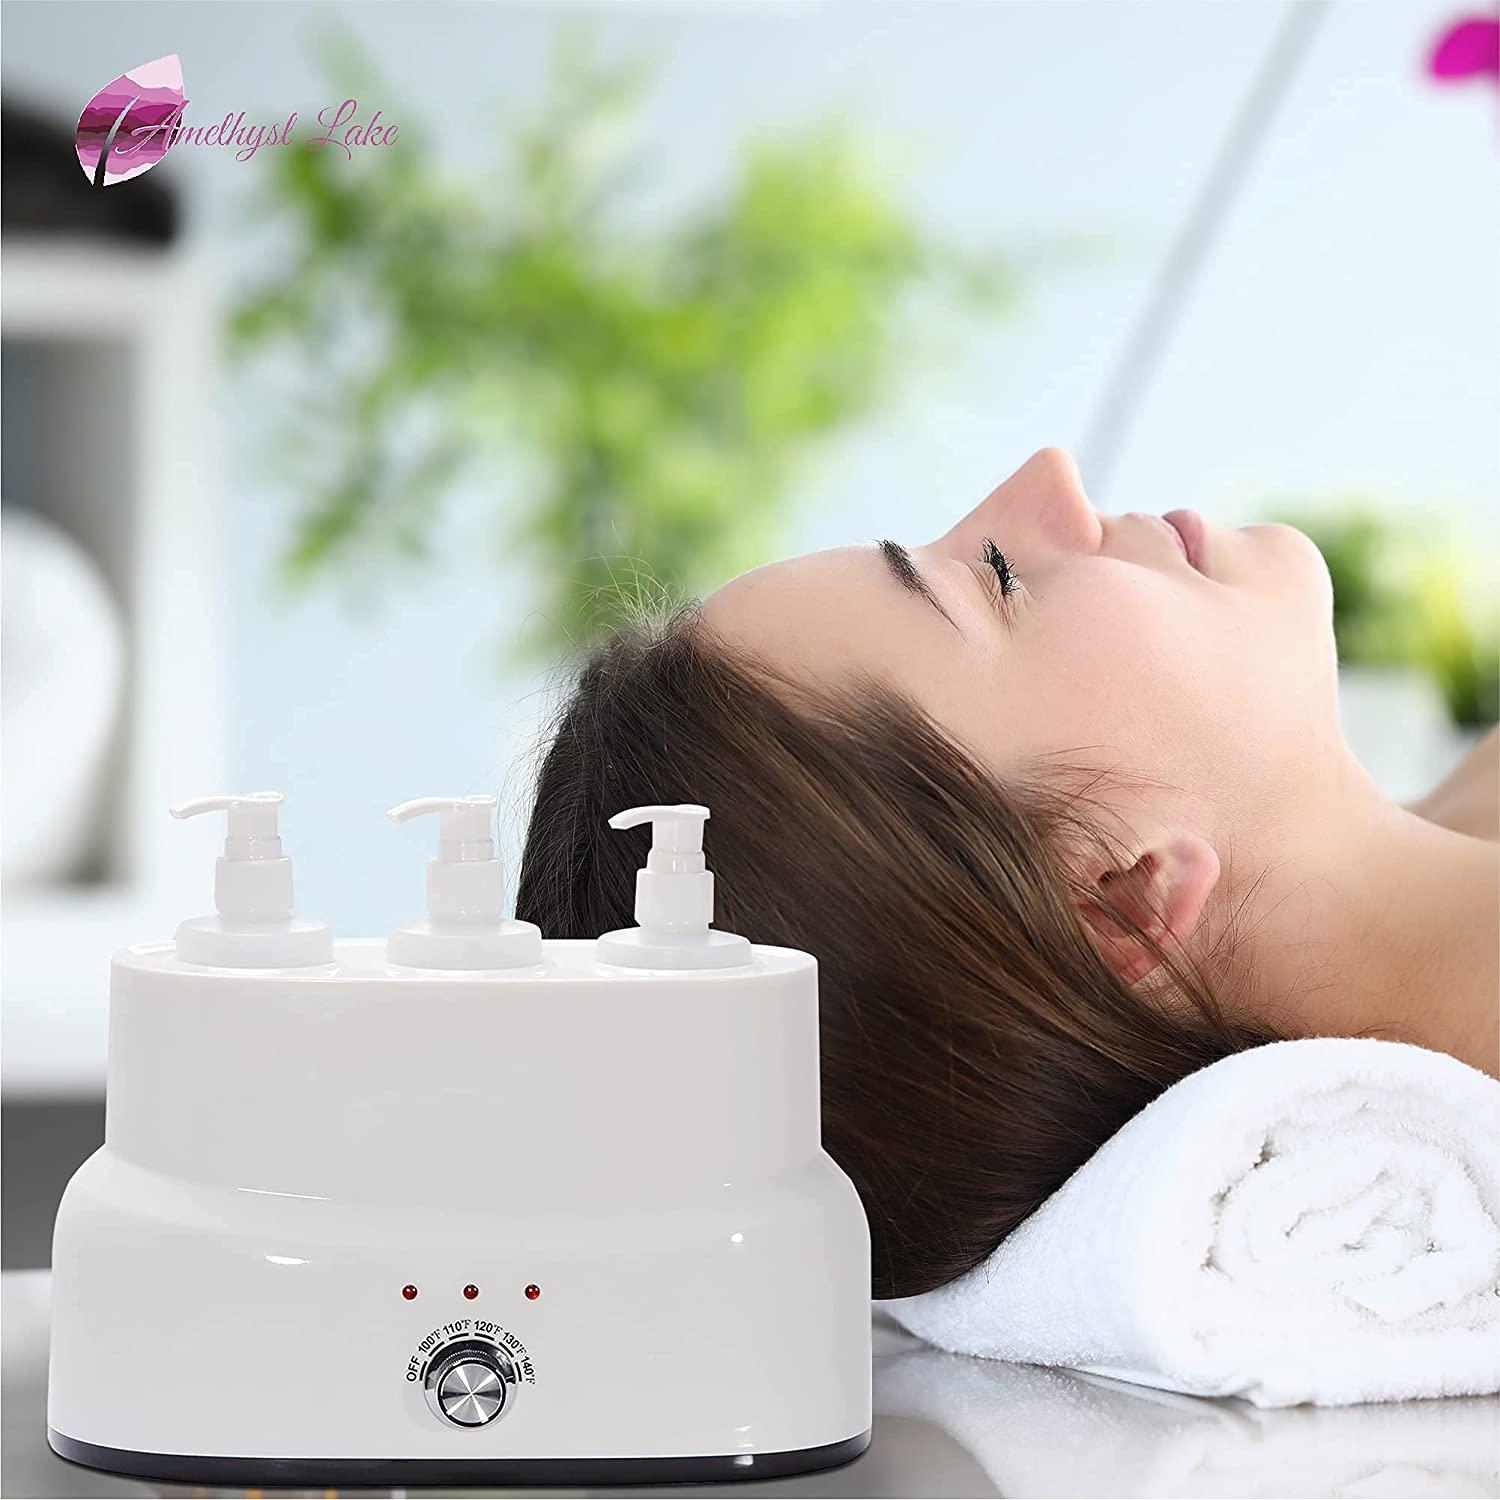 AMETHYST LAKE Massage Oil Warmer for Professional Salon Spa